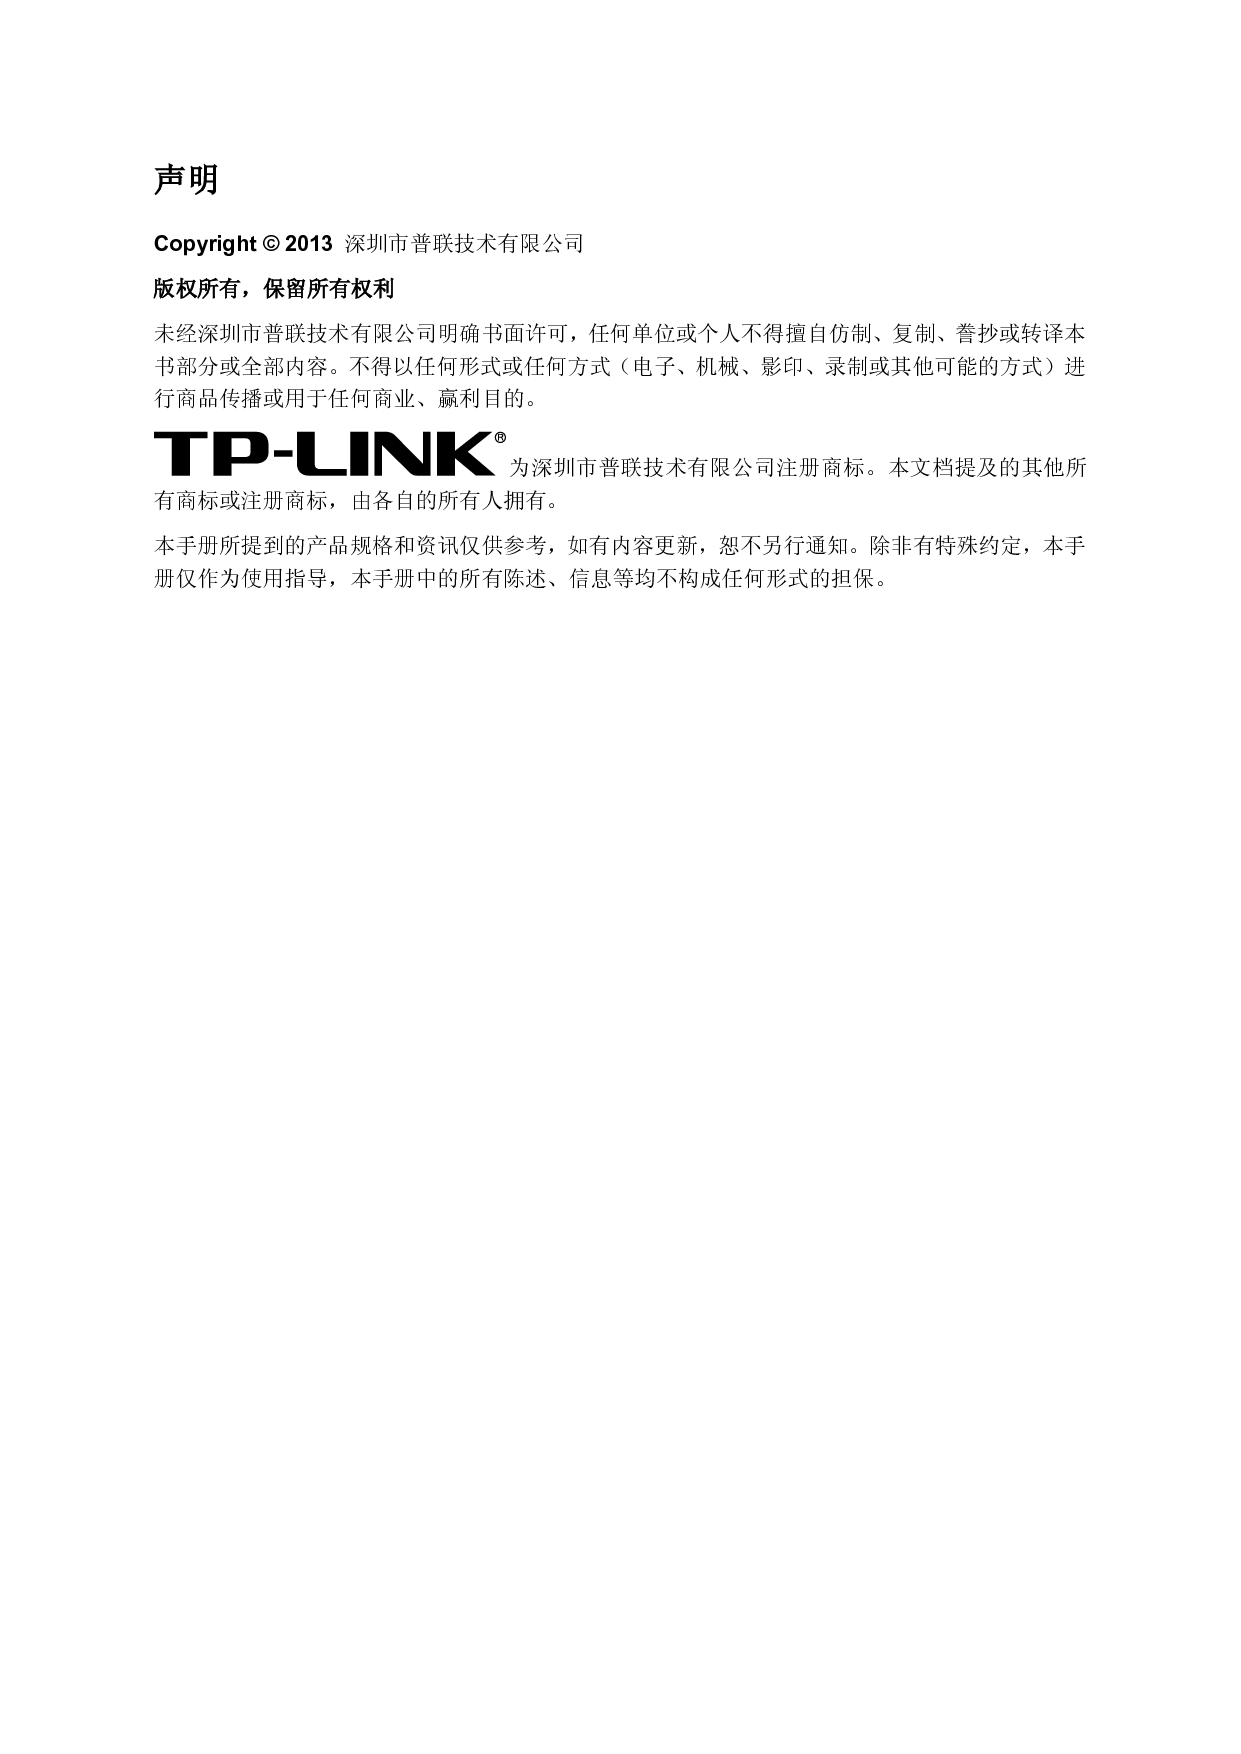 普联 TP-Link TL-WR742N 设置指南 第1页